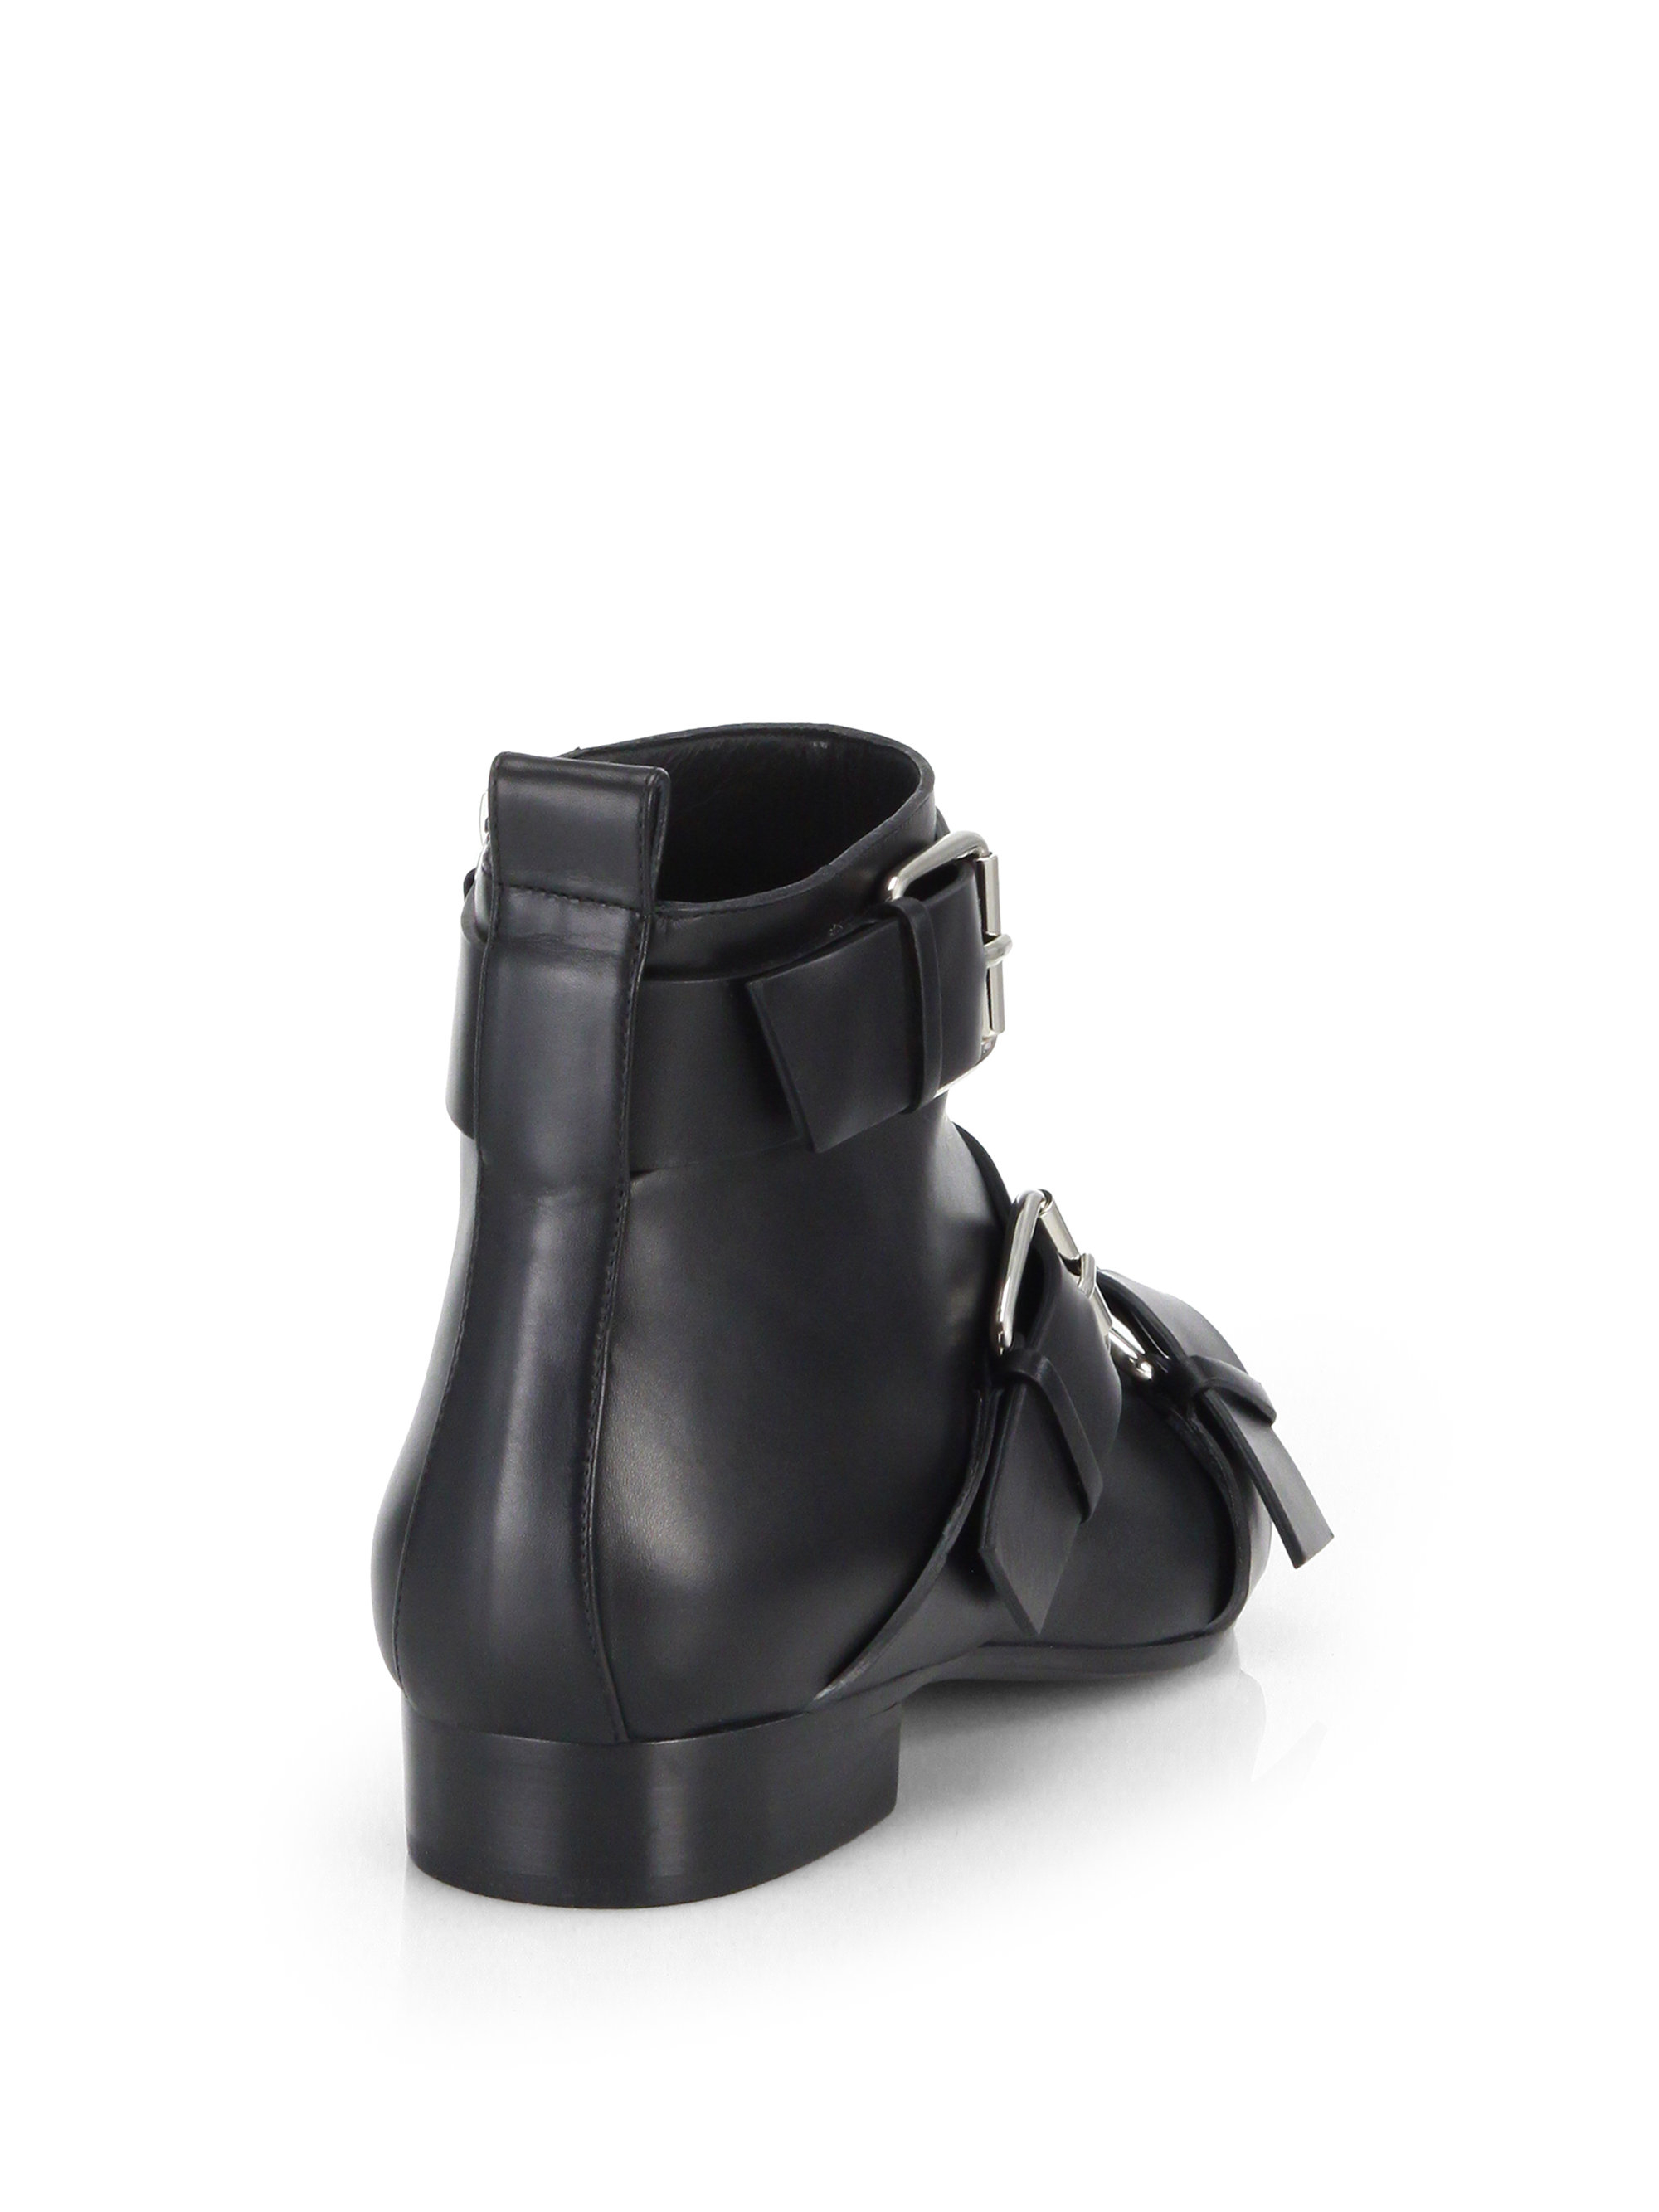 Lyst - Giuseppe Zanotti Triple Buckle Ankle Boots in Black for Men